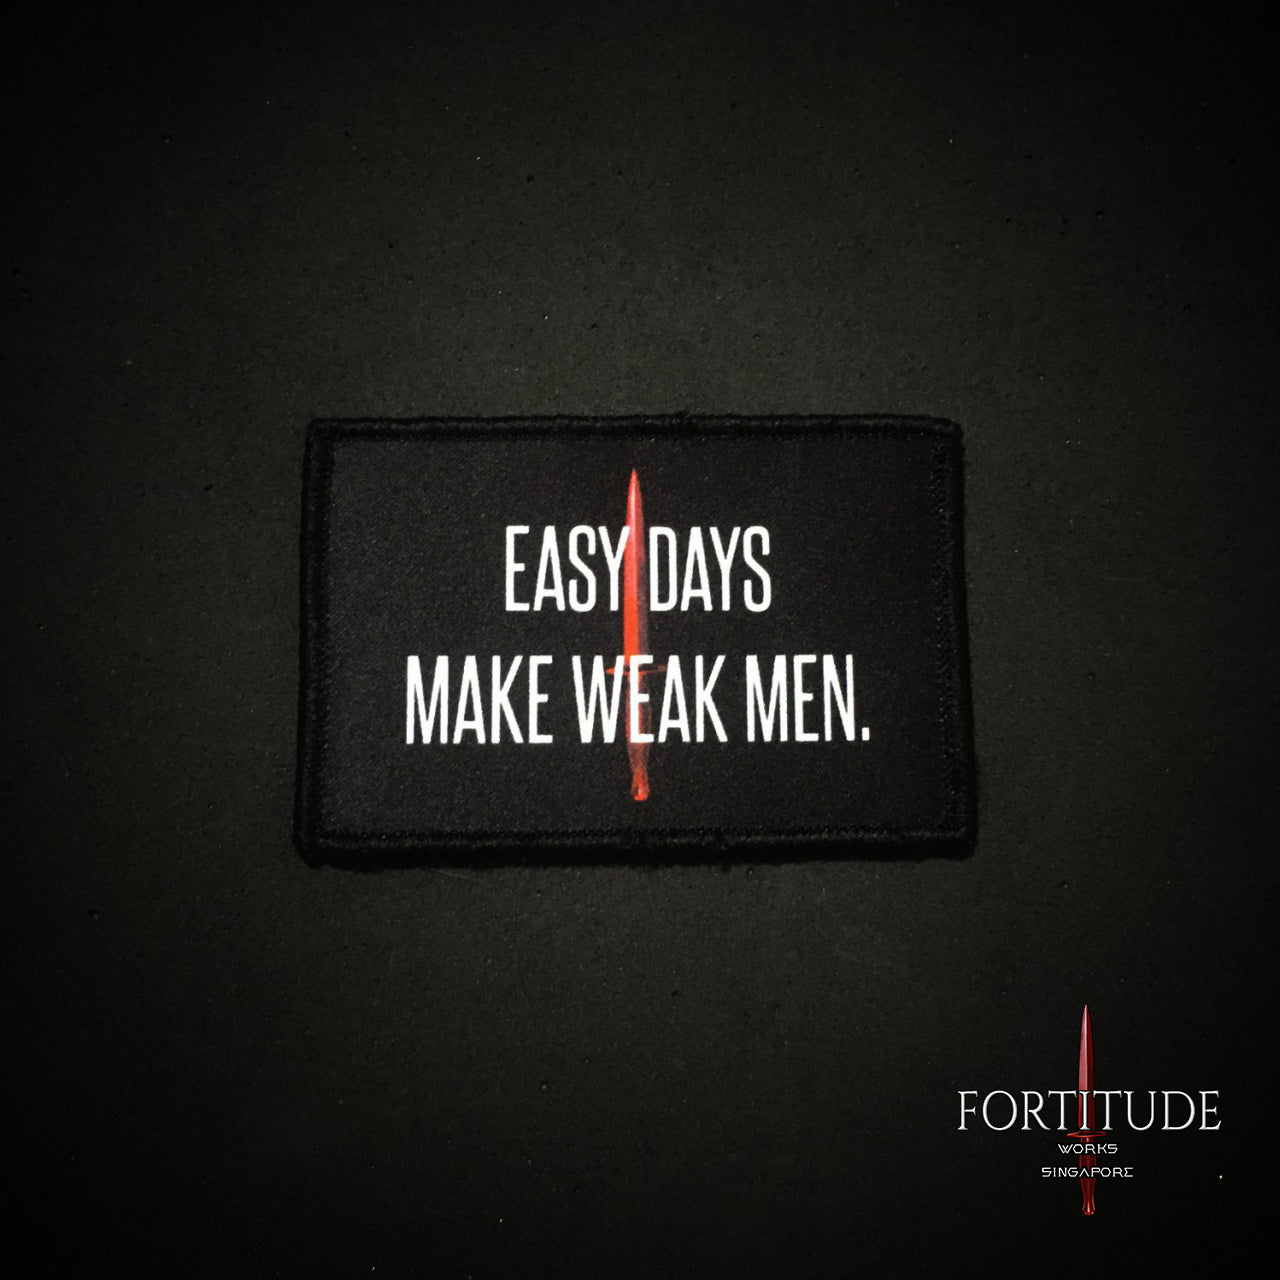 EASY DAYS MAKE WEAK MEN - FORTITUDE WORKS SINGAPORE